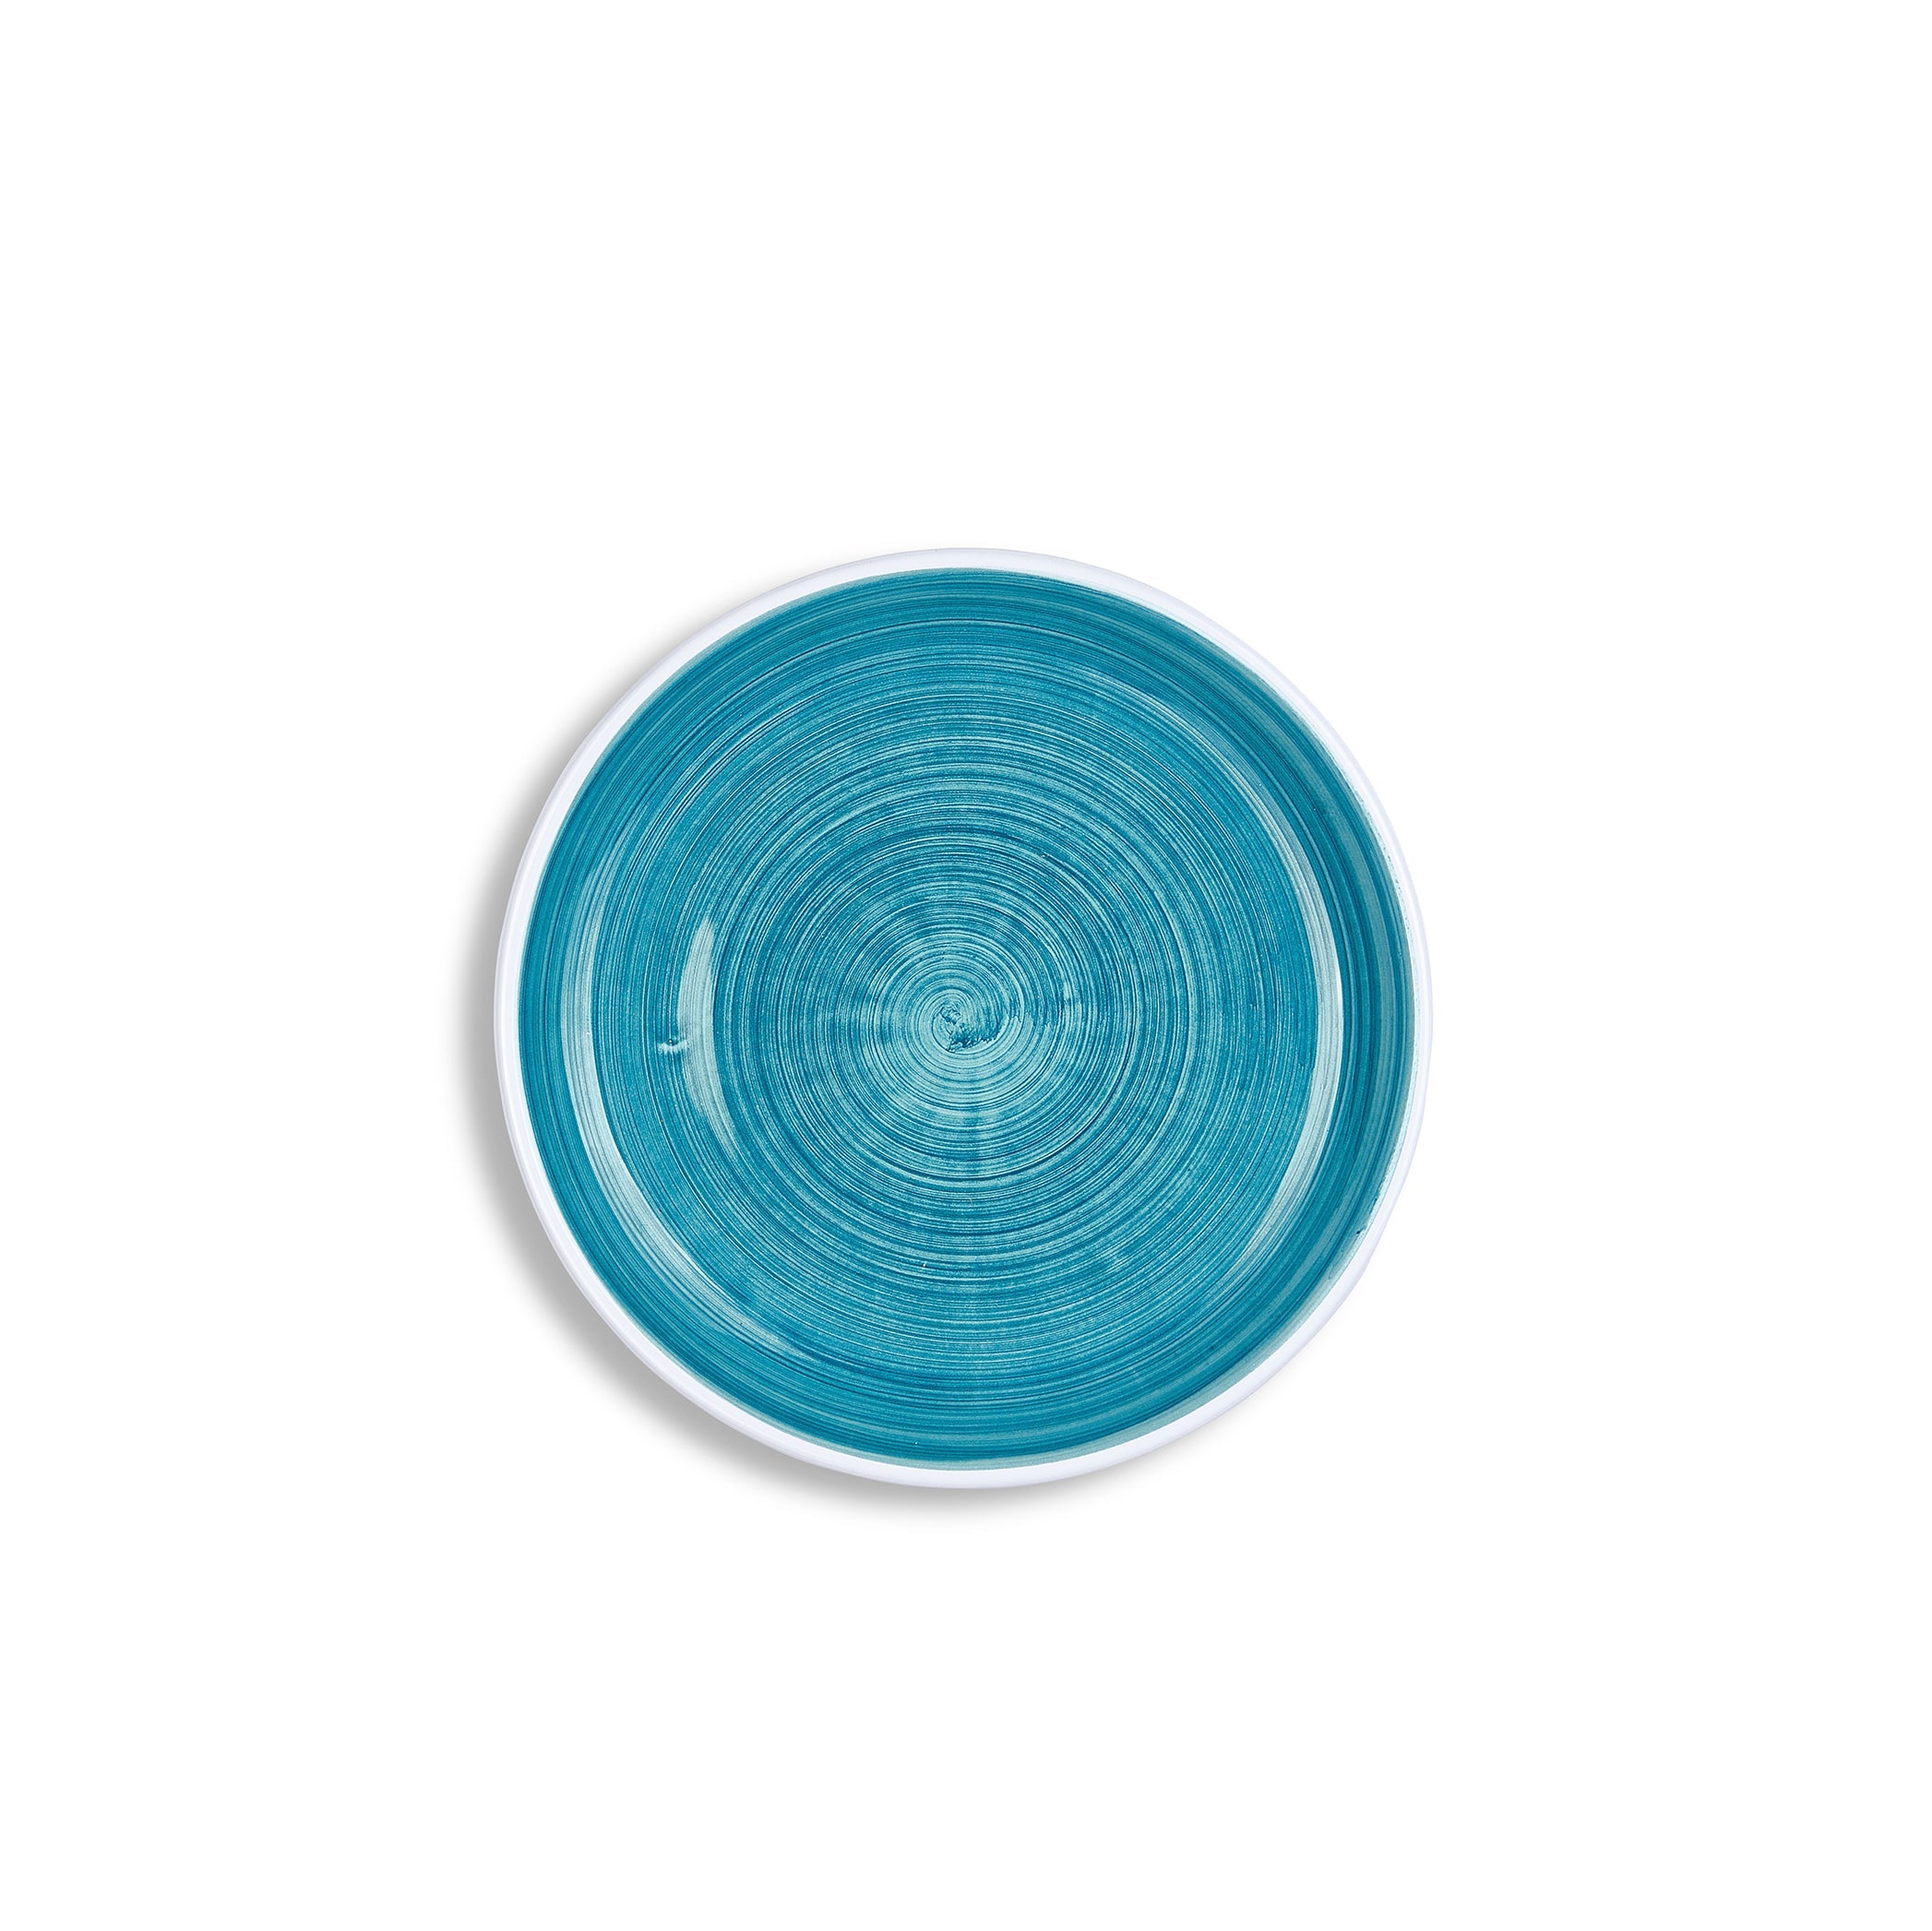 S&B 'Brushed' Ceramic Side Plate in Sea Blue, 21cm